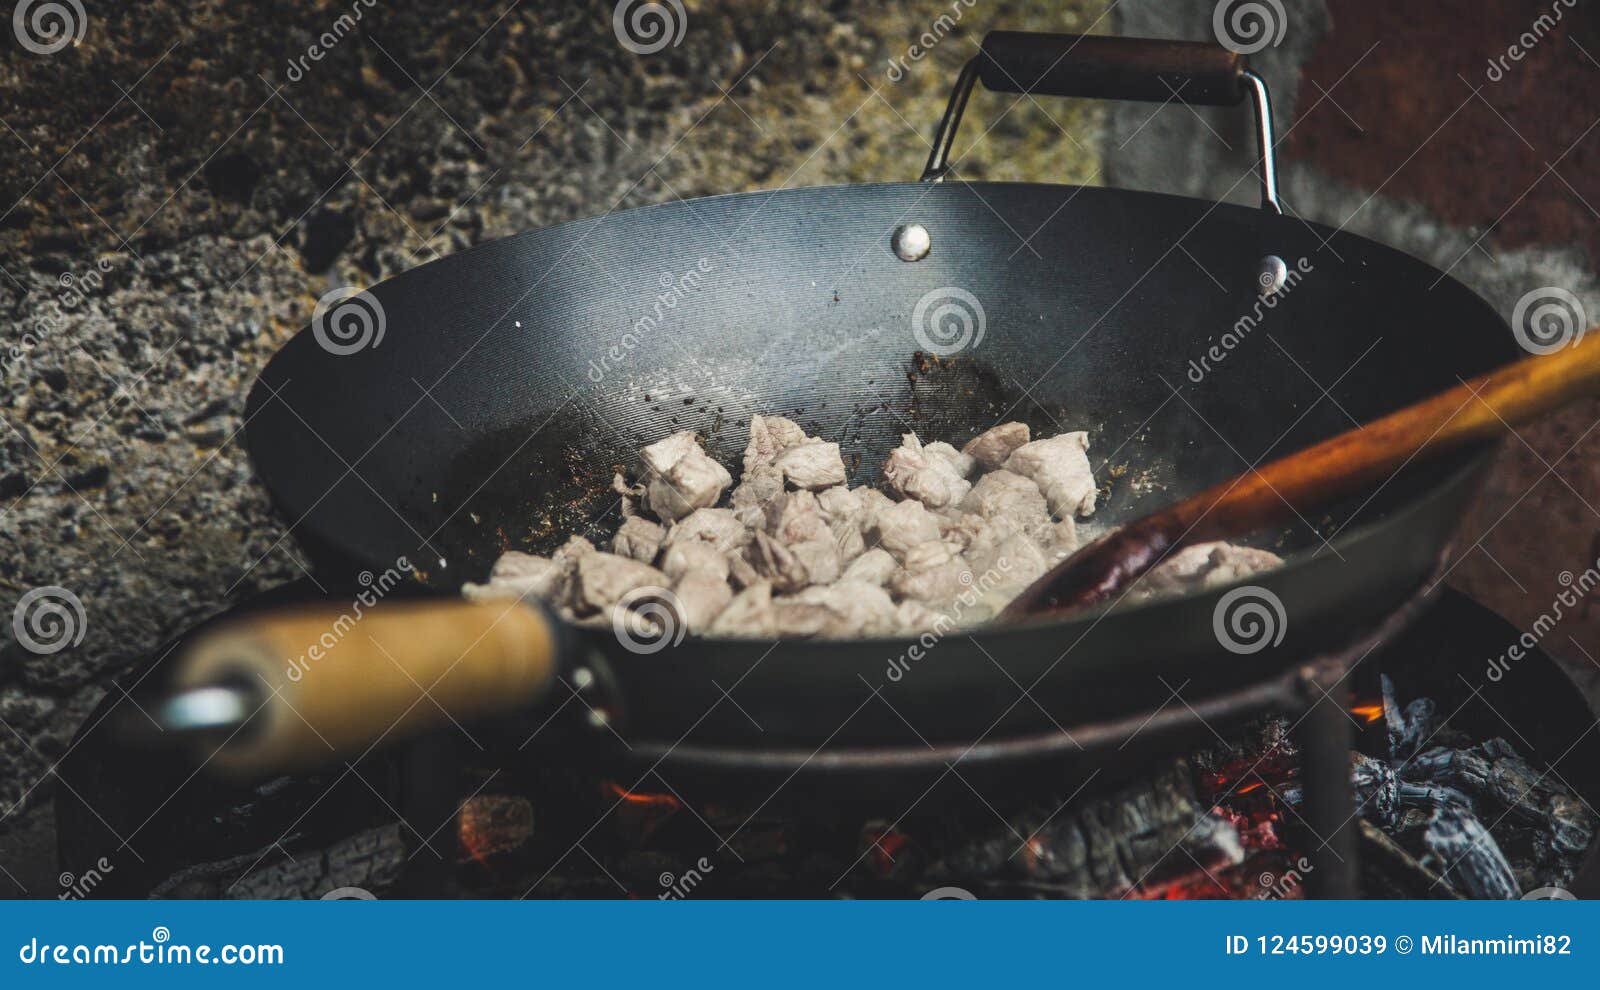 the cook prepares food in natur